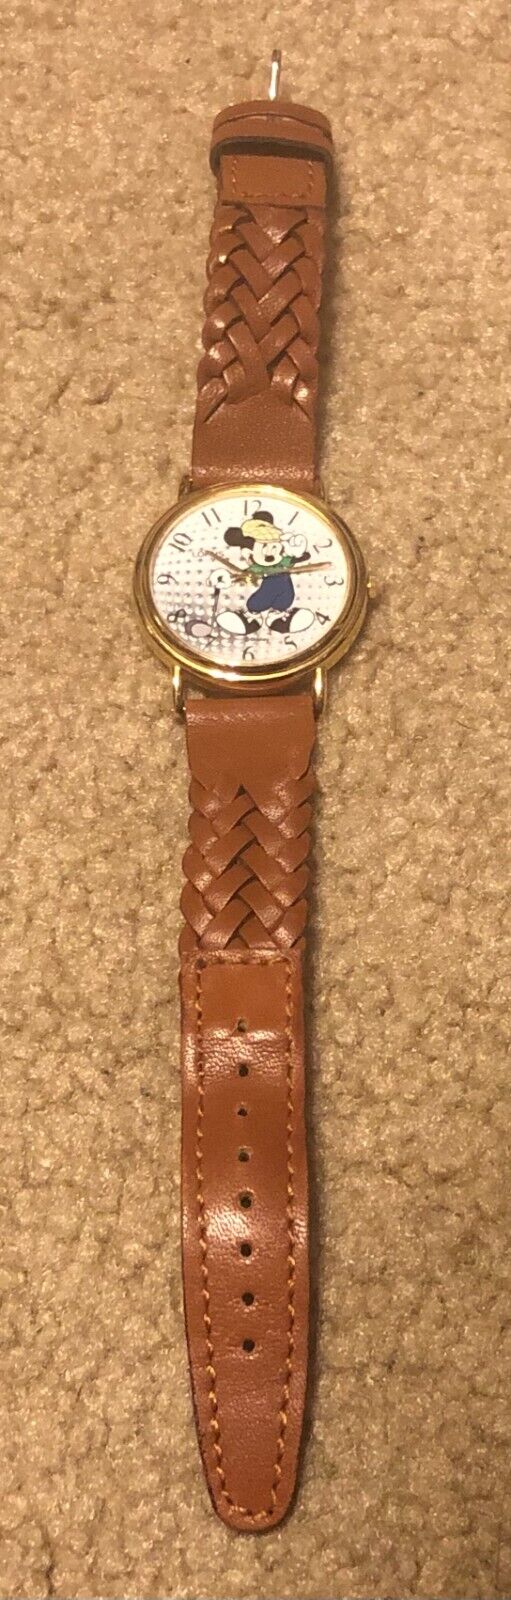 Lorus Mickey Mouse Golf Watch v501-8b90